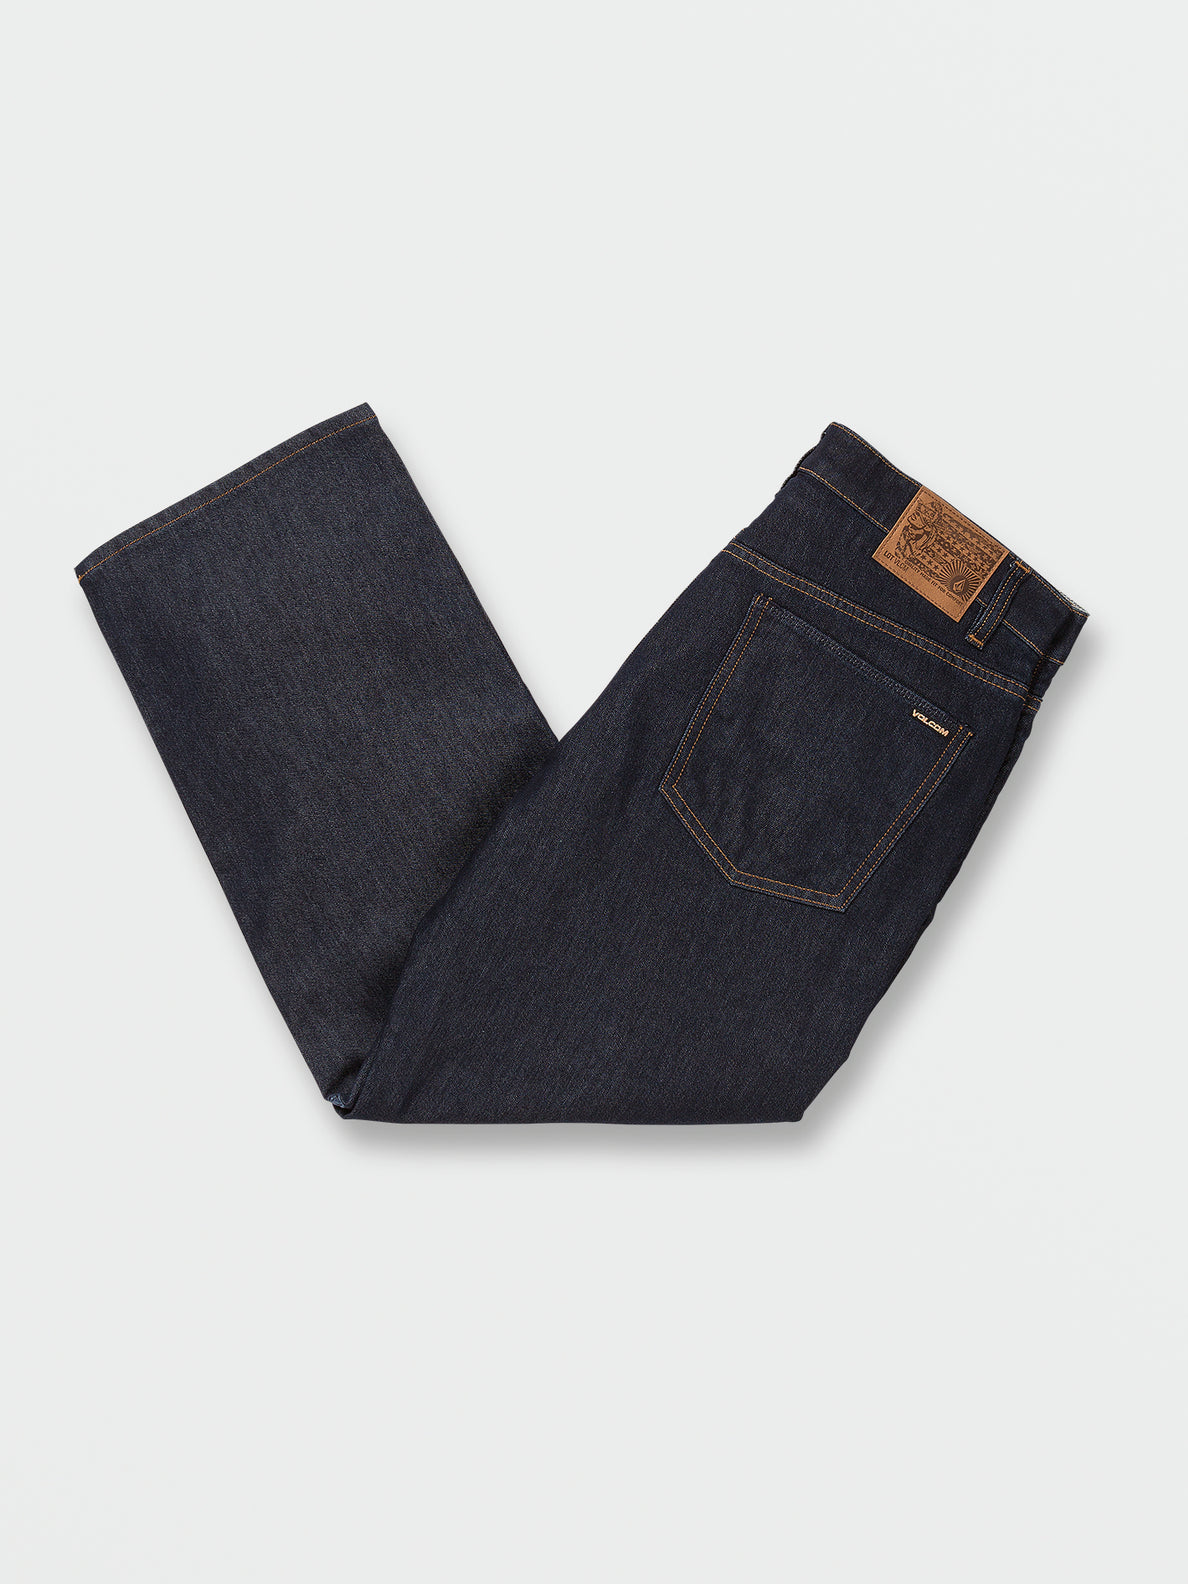 Nailer Jeans - Dust Bowl Indigo (A1942200_DBL) [B]